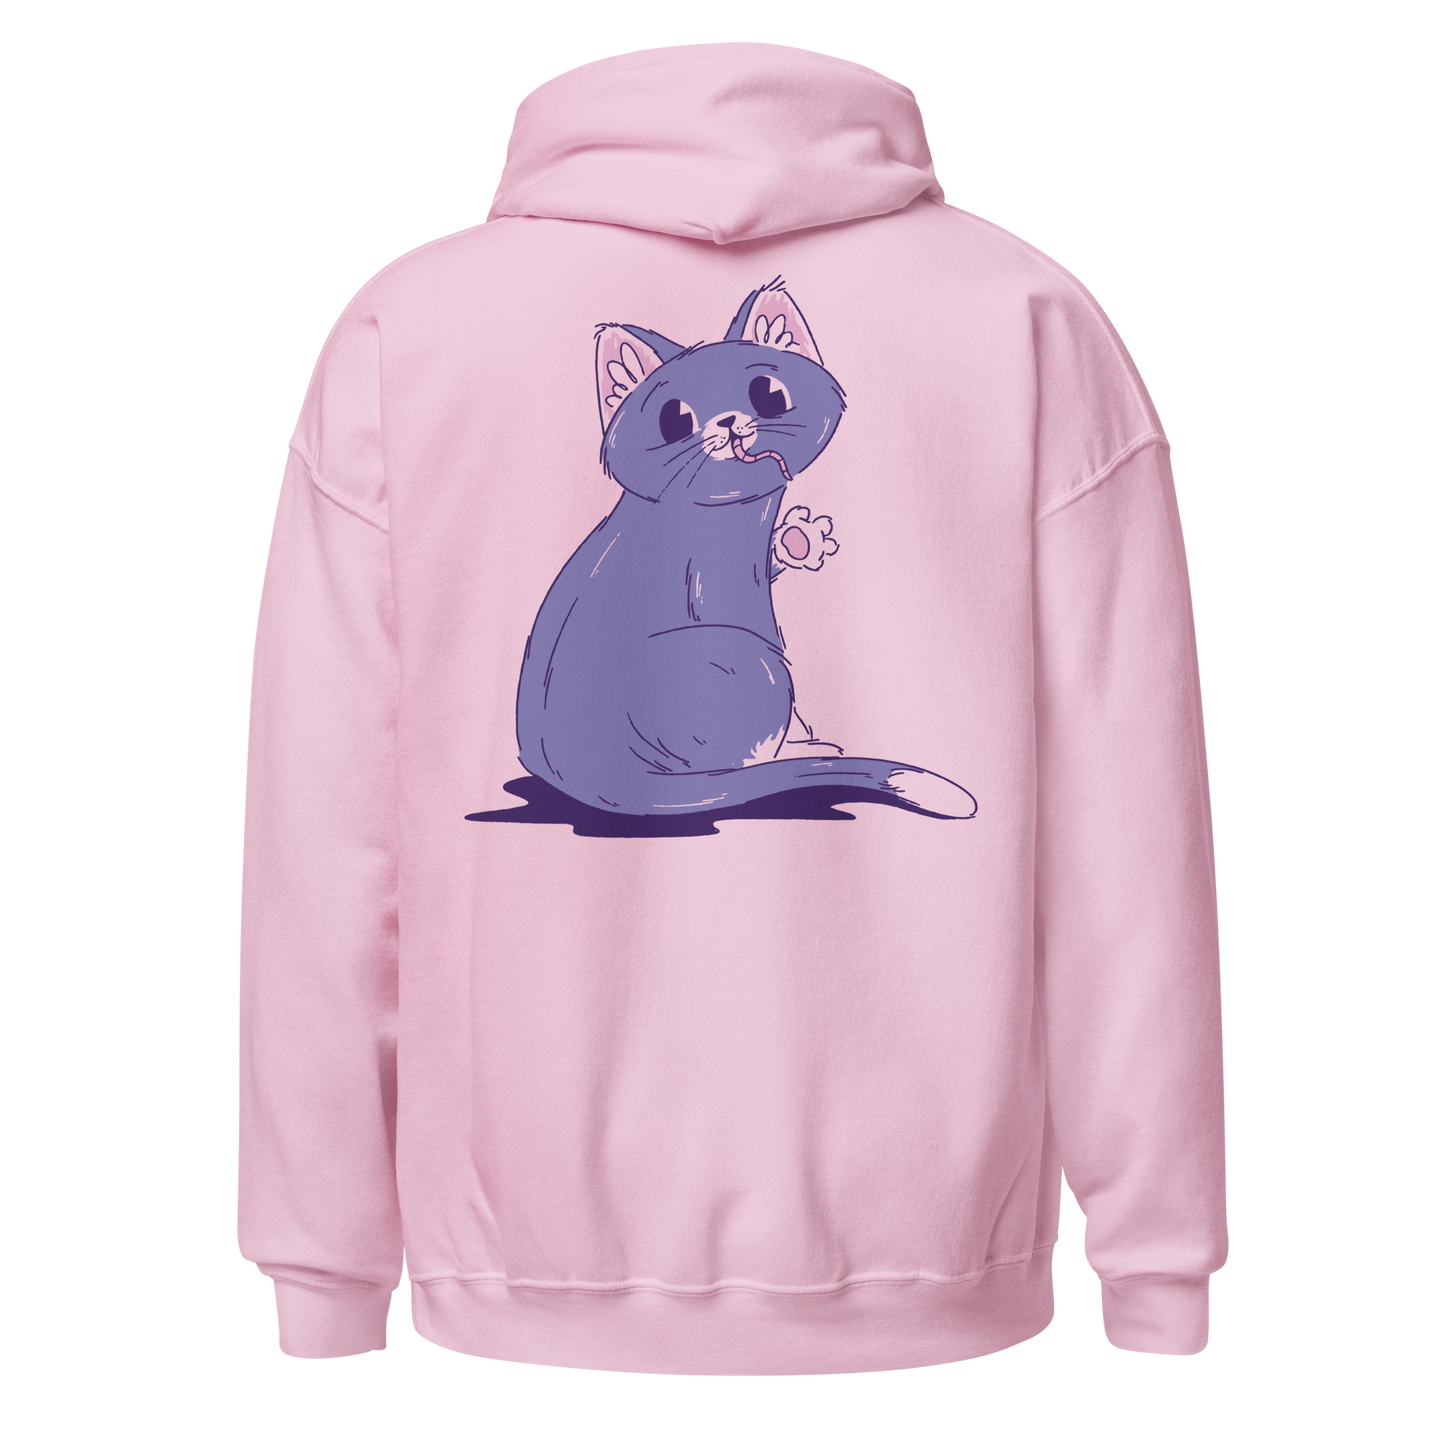 Purple cat eating mouse | Unisex Hoodie - F&B